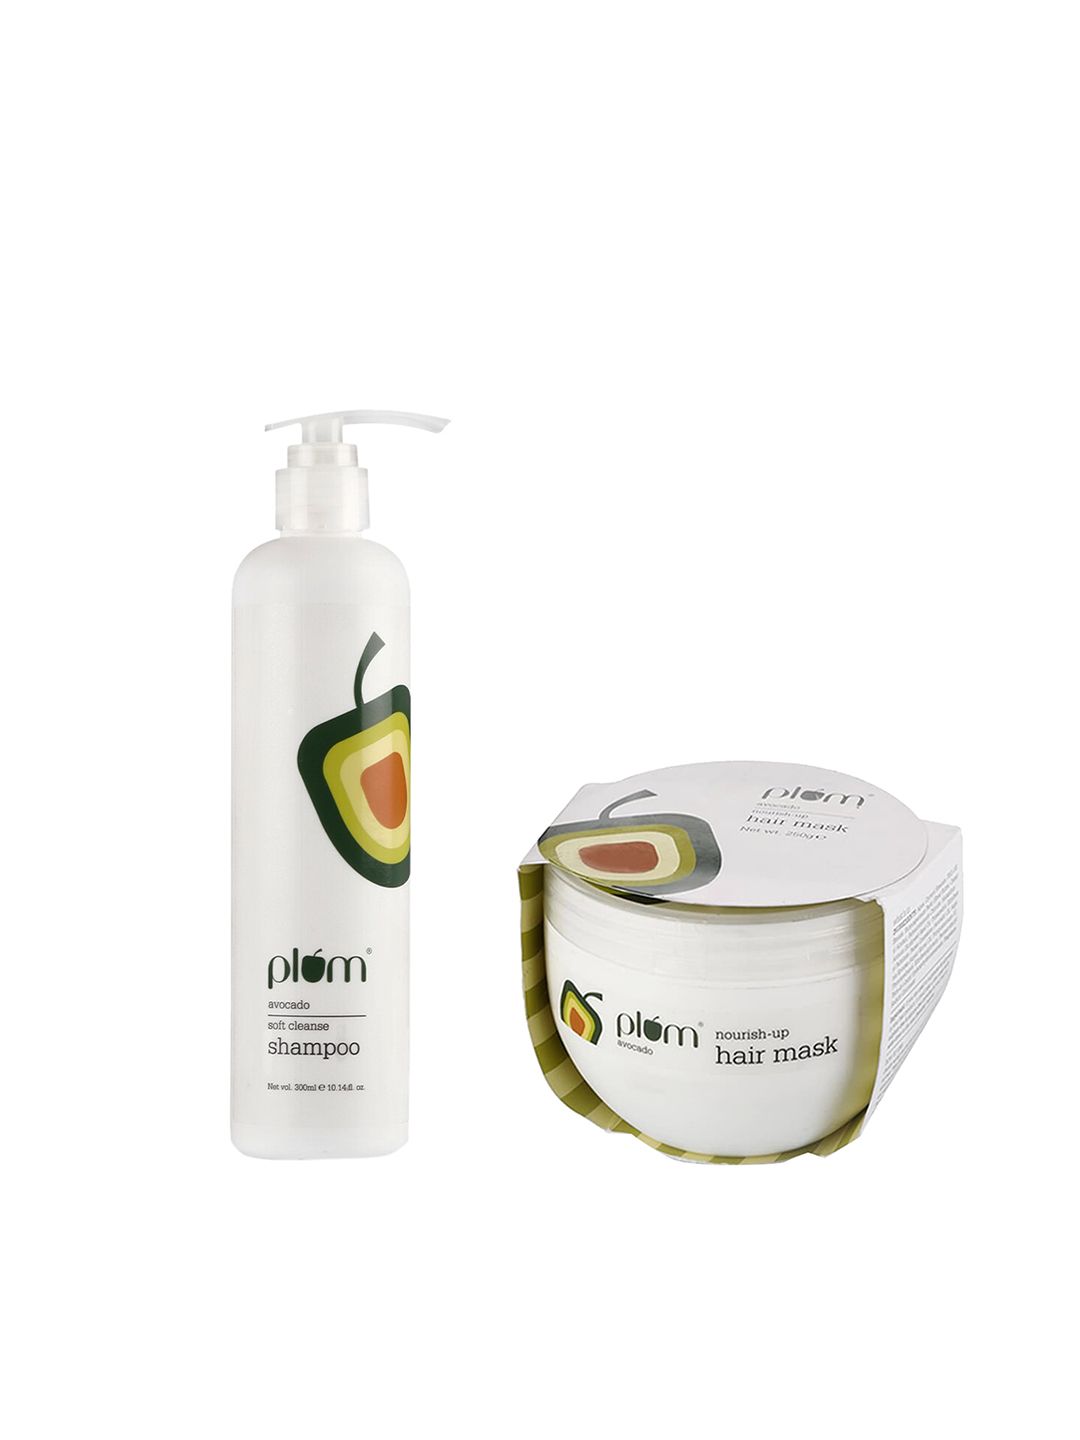 Plum Set of Avocado Soft Cleanse Shampoo & Nourish Up Hair Mask Price in India